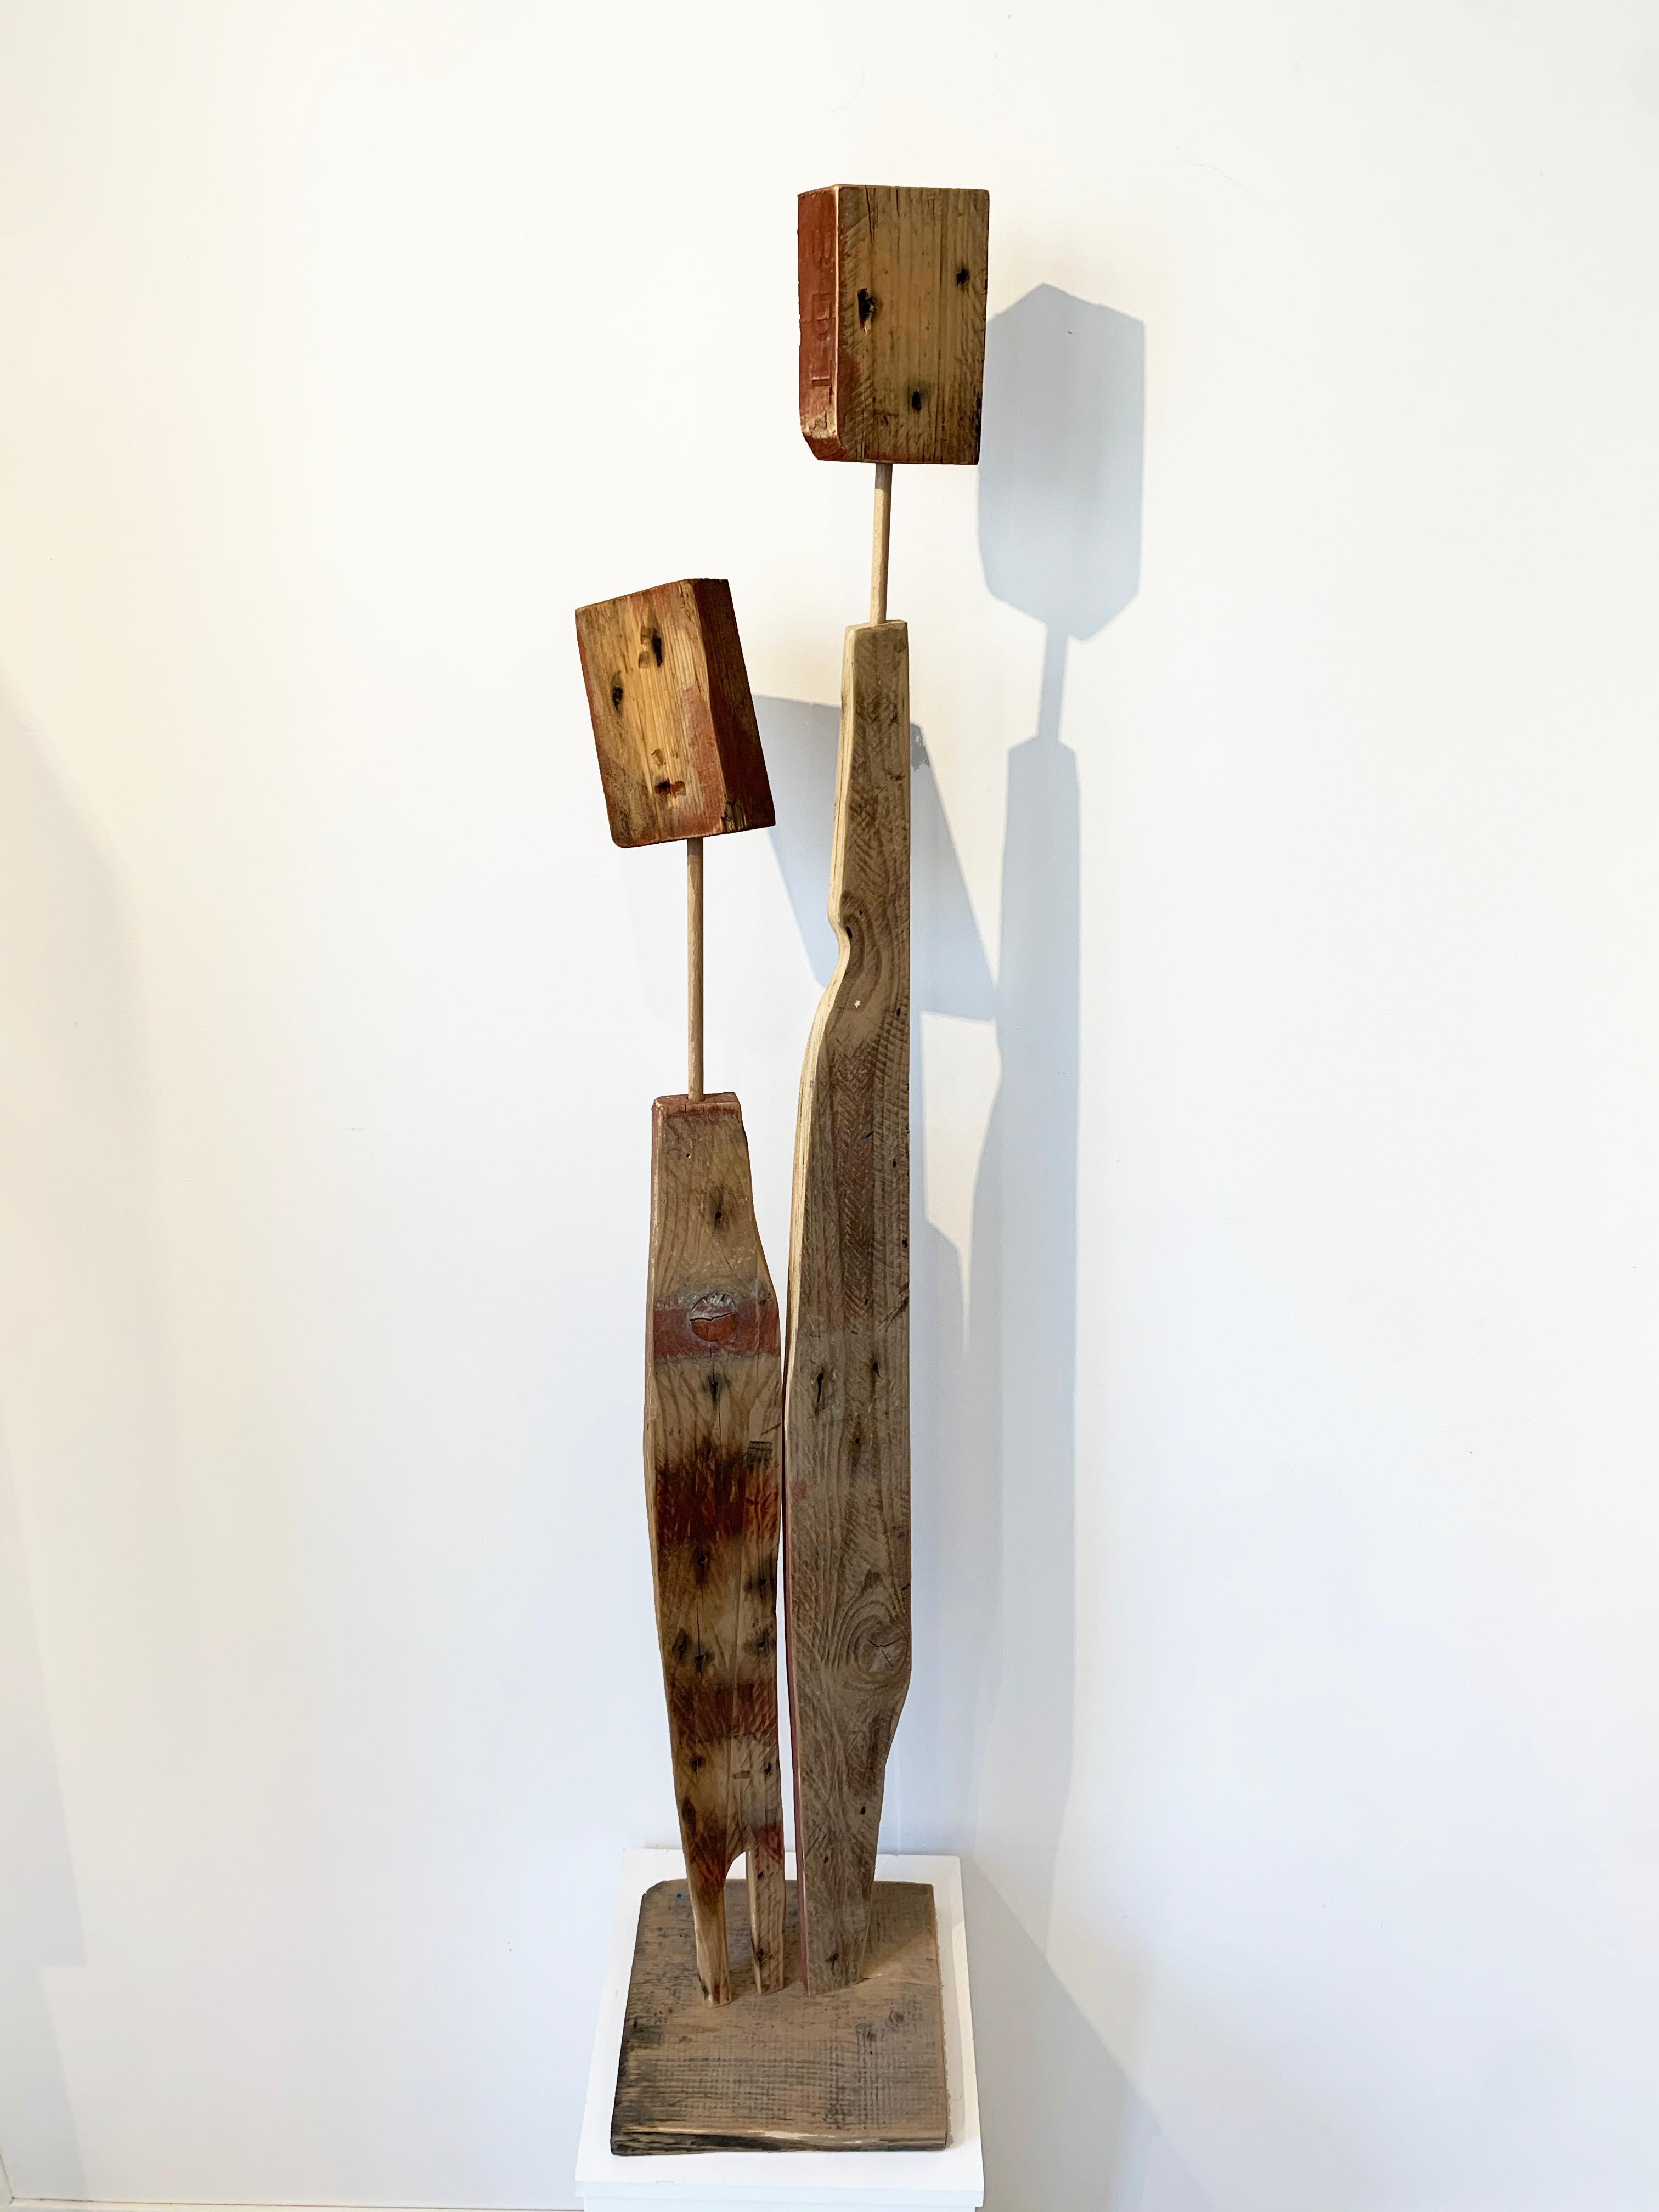 Gilbert Pauli Abstract Sculpture - The little inhabitants